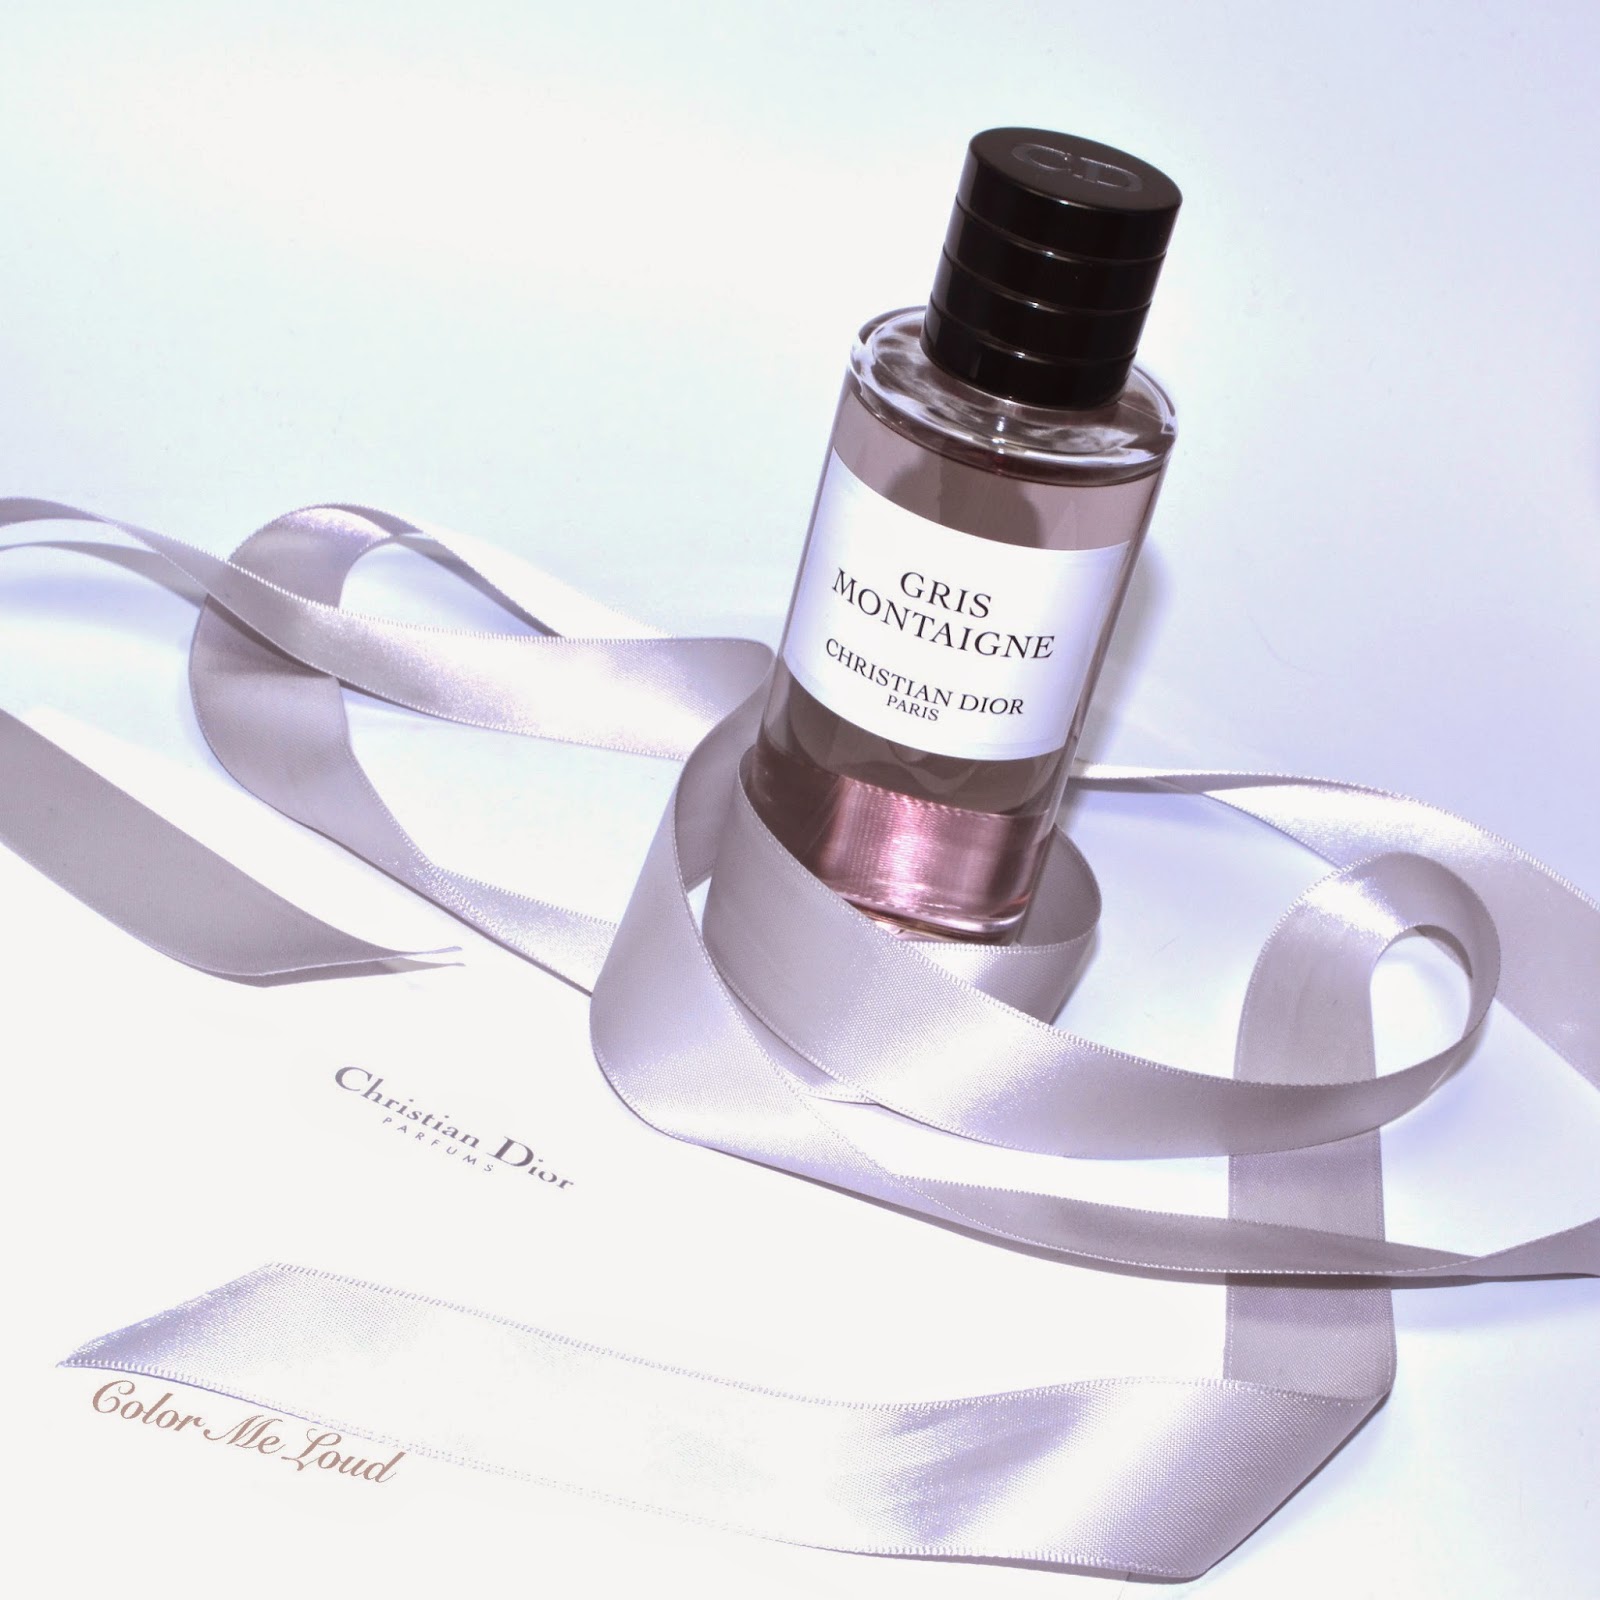 Christian Dior Gris Montaigne Eau de Perfum for Collection Privée, Review 